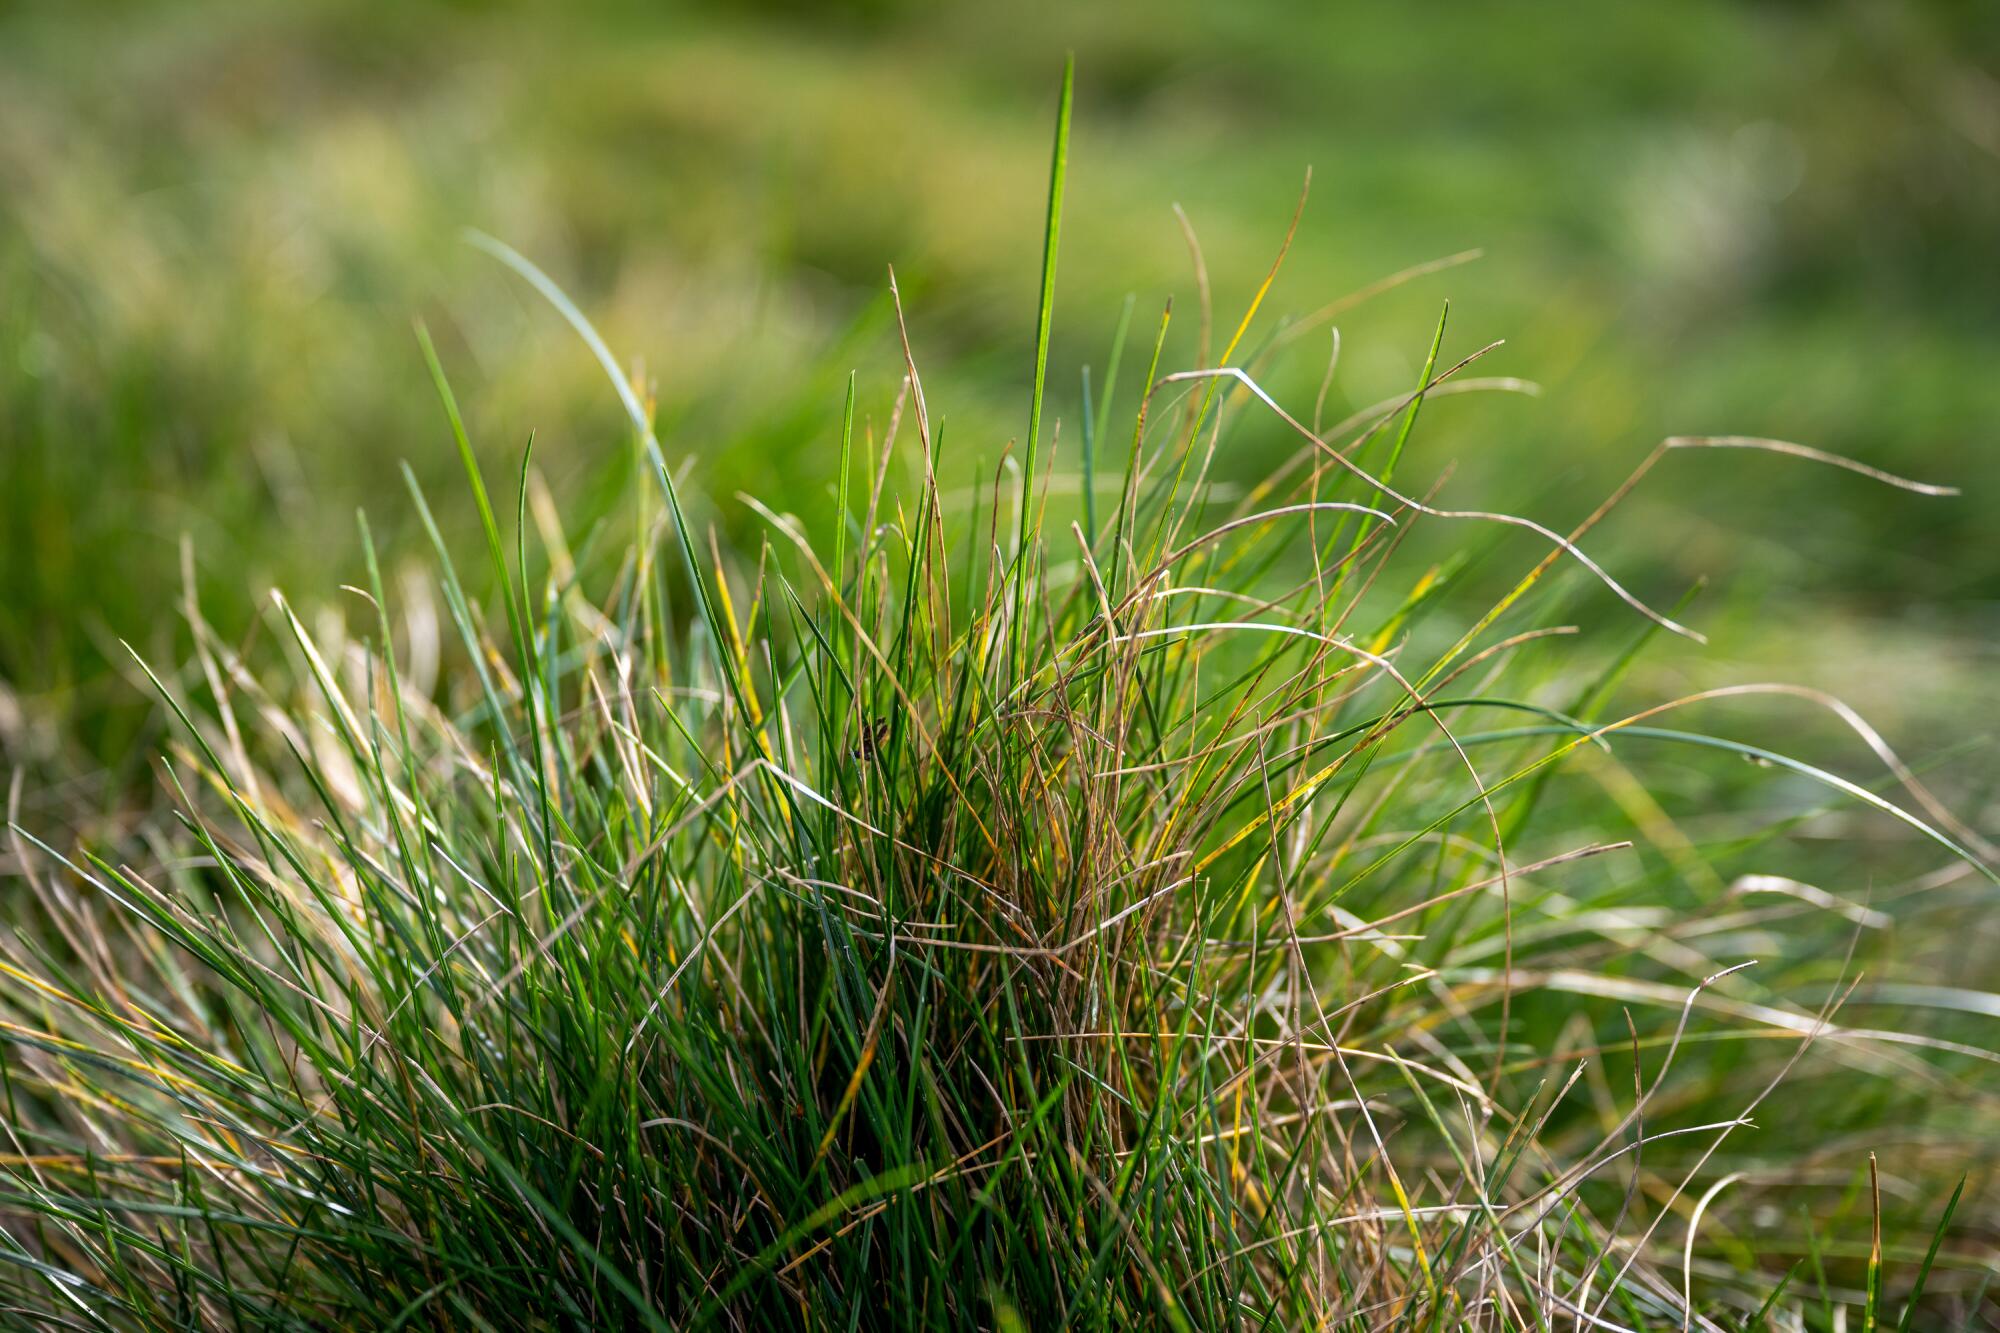 A closeup of a tuft of fescue grass.